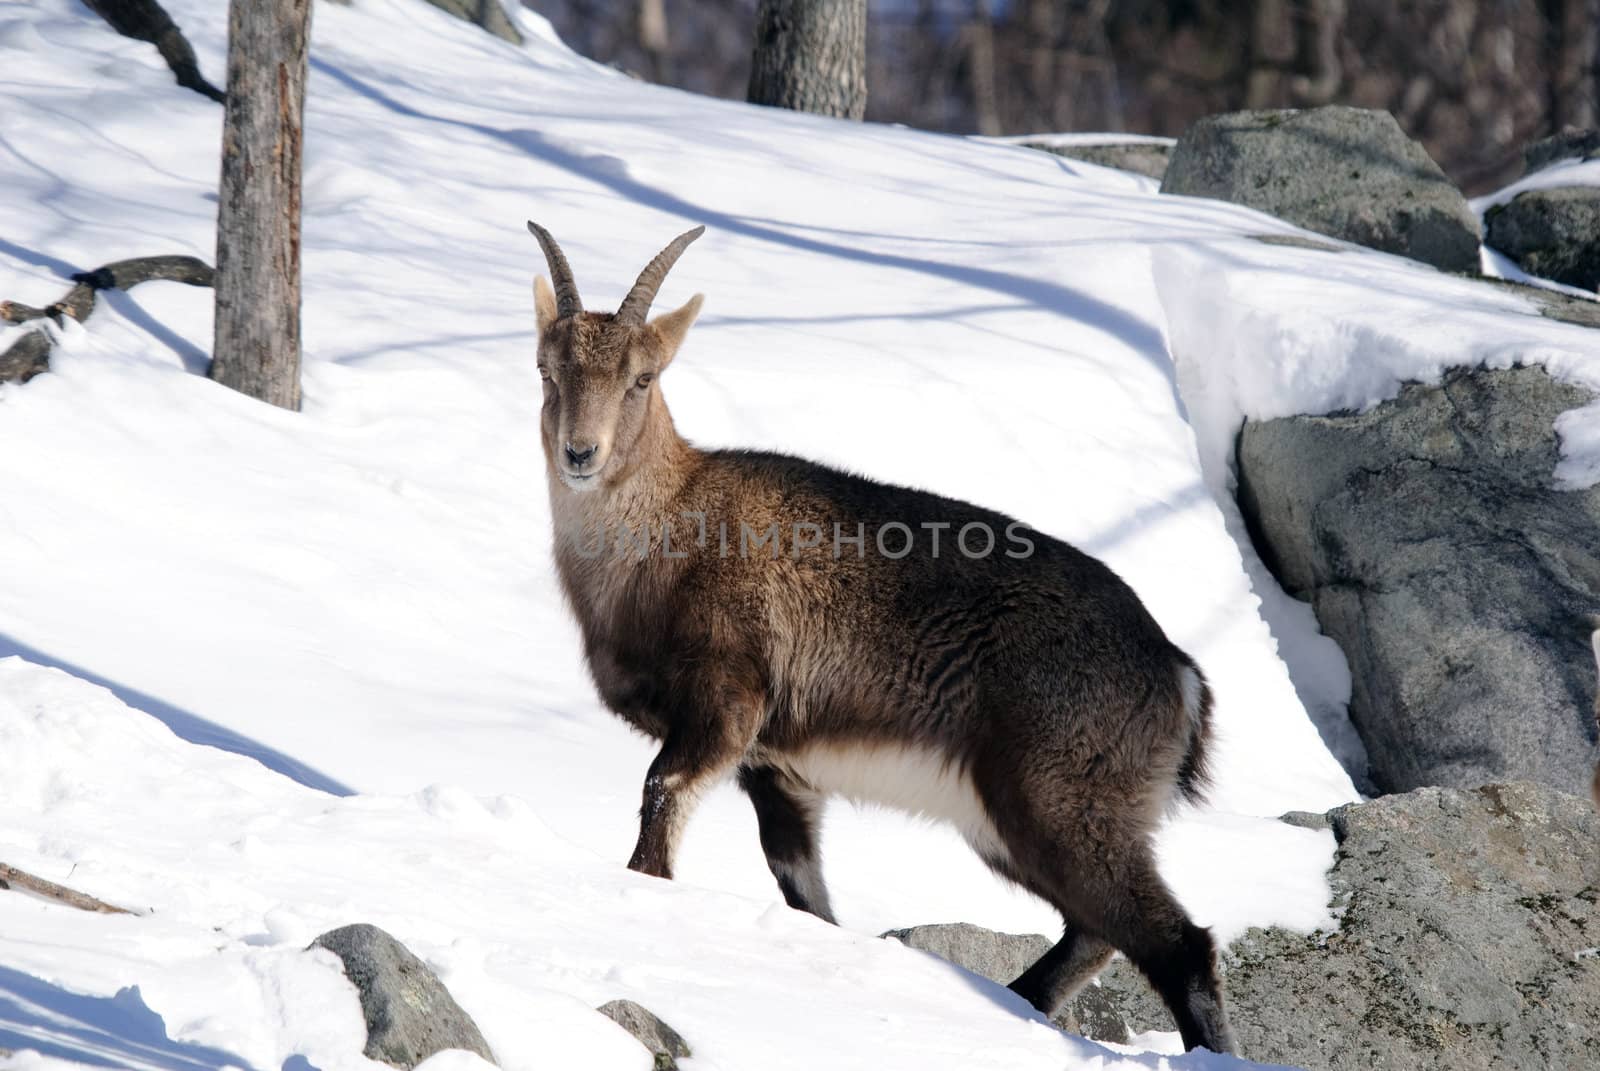 Alpine Ibex in Winter